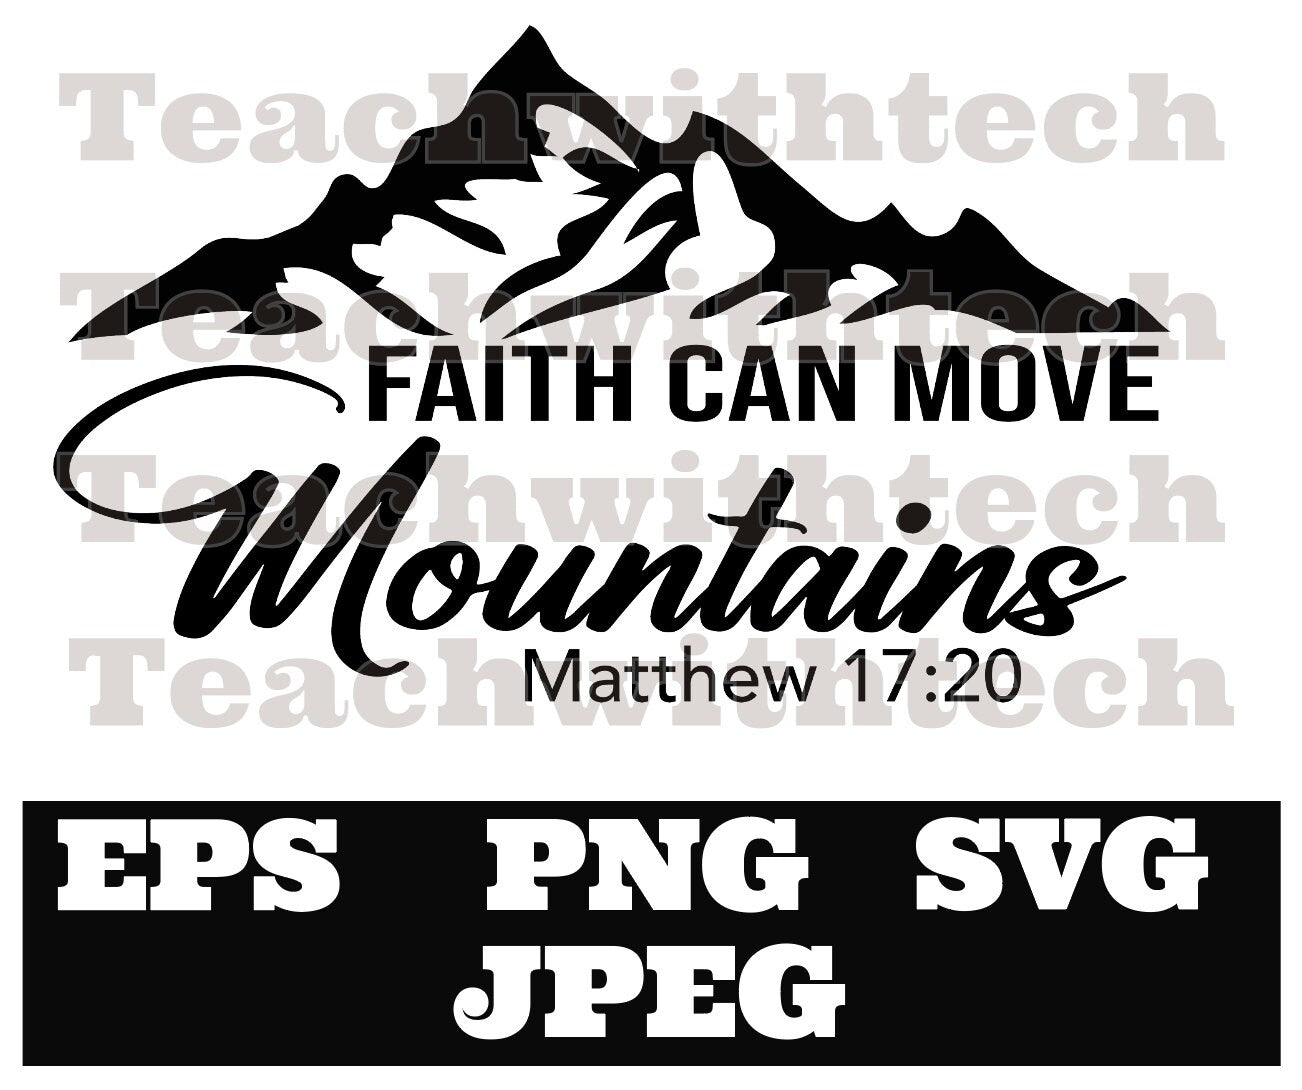 Faith can move mountains Matthew 17:20 png EPS SVG jpeg Download Christian svg Jeus png T shirts vinyl Church Publications